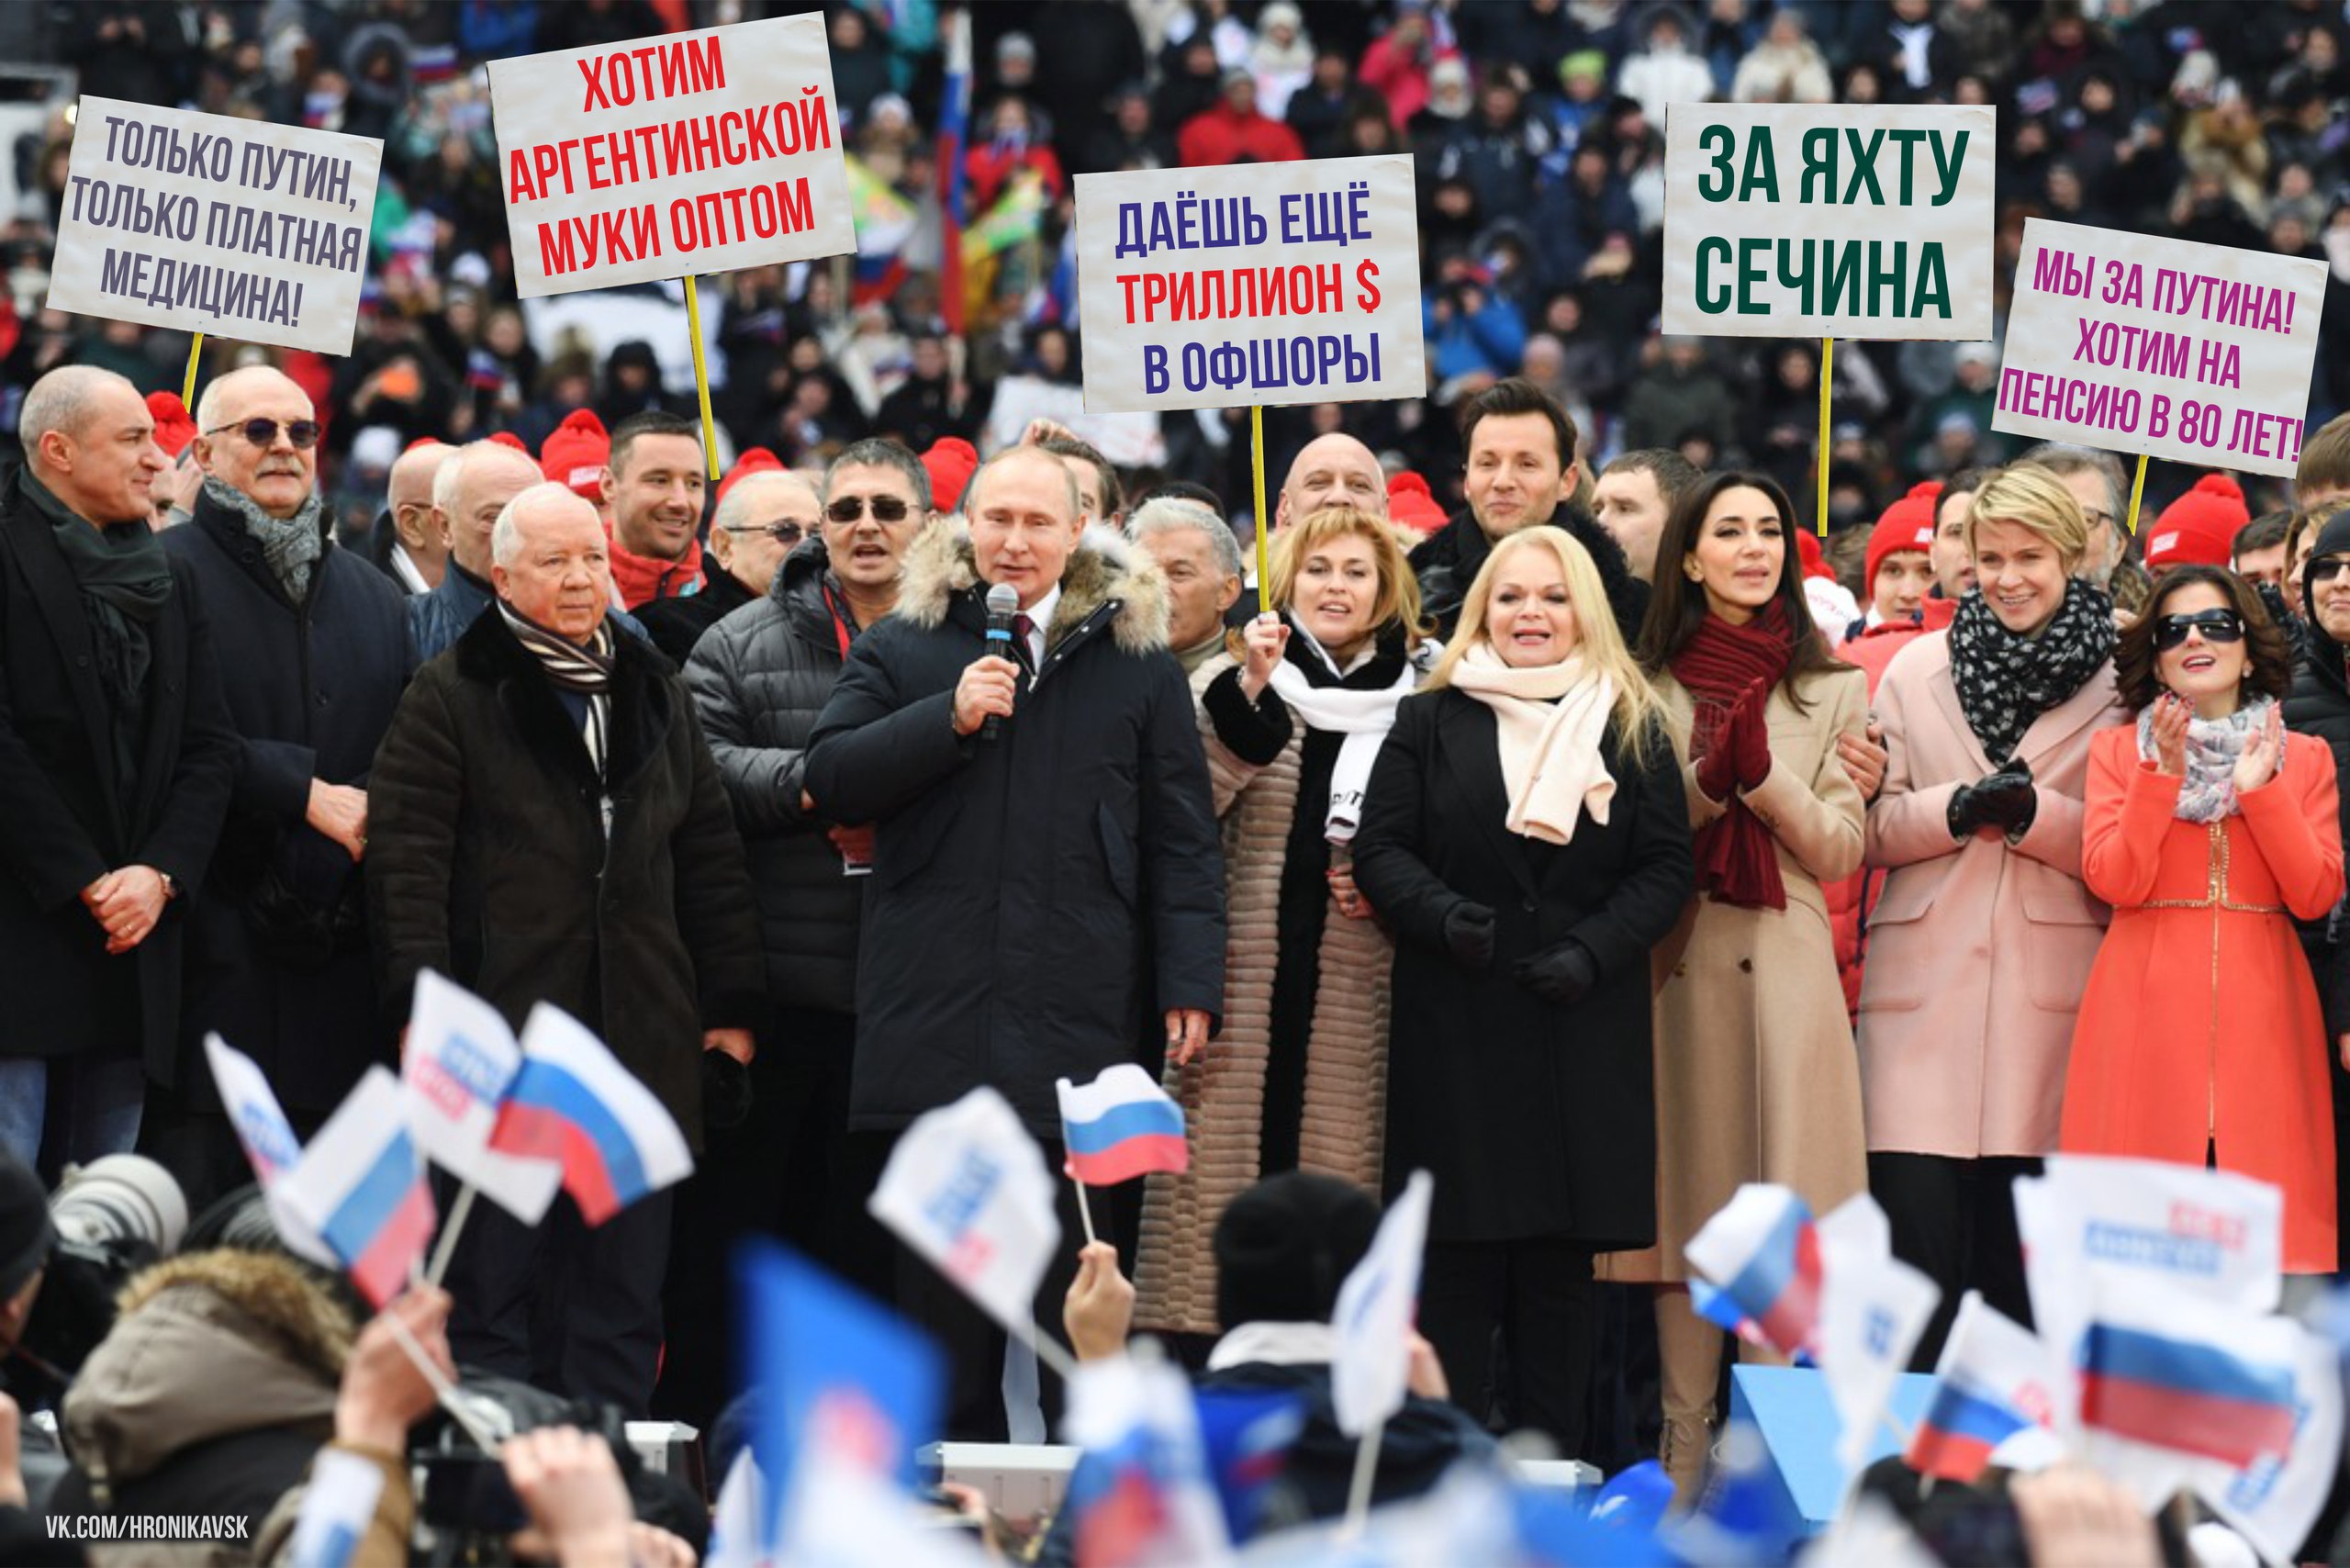 Политика против народа. Митинг в Лужниках в поддержку Путина 2018. Митинг за Путина Лужники.